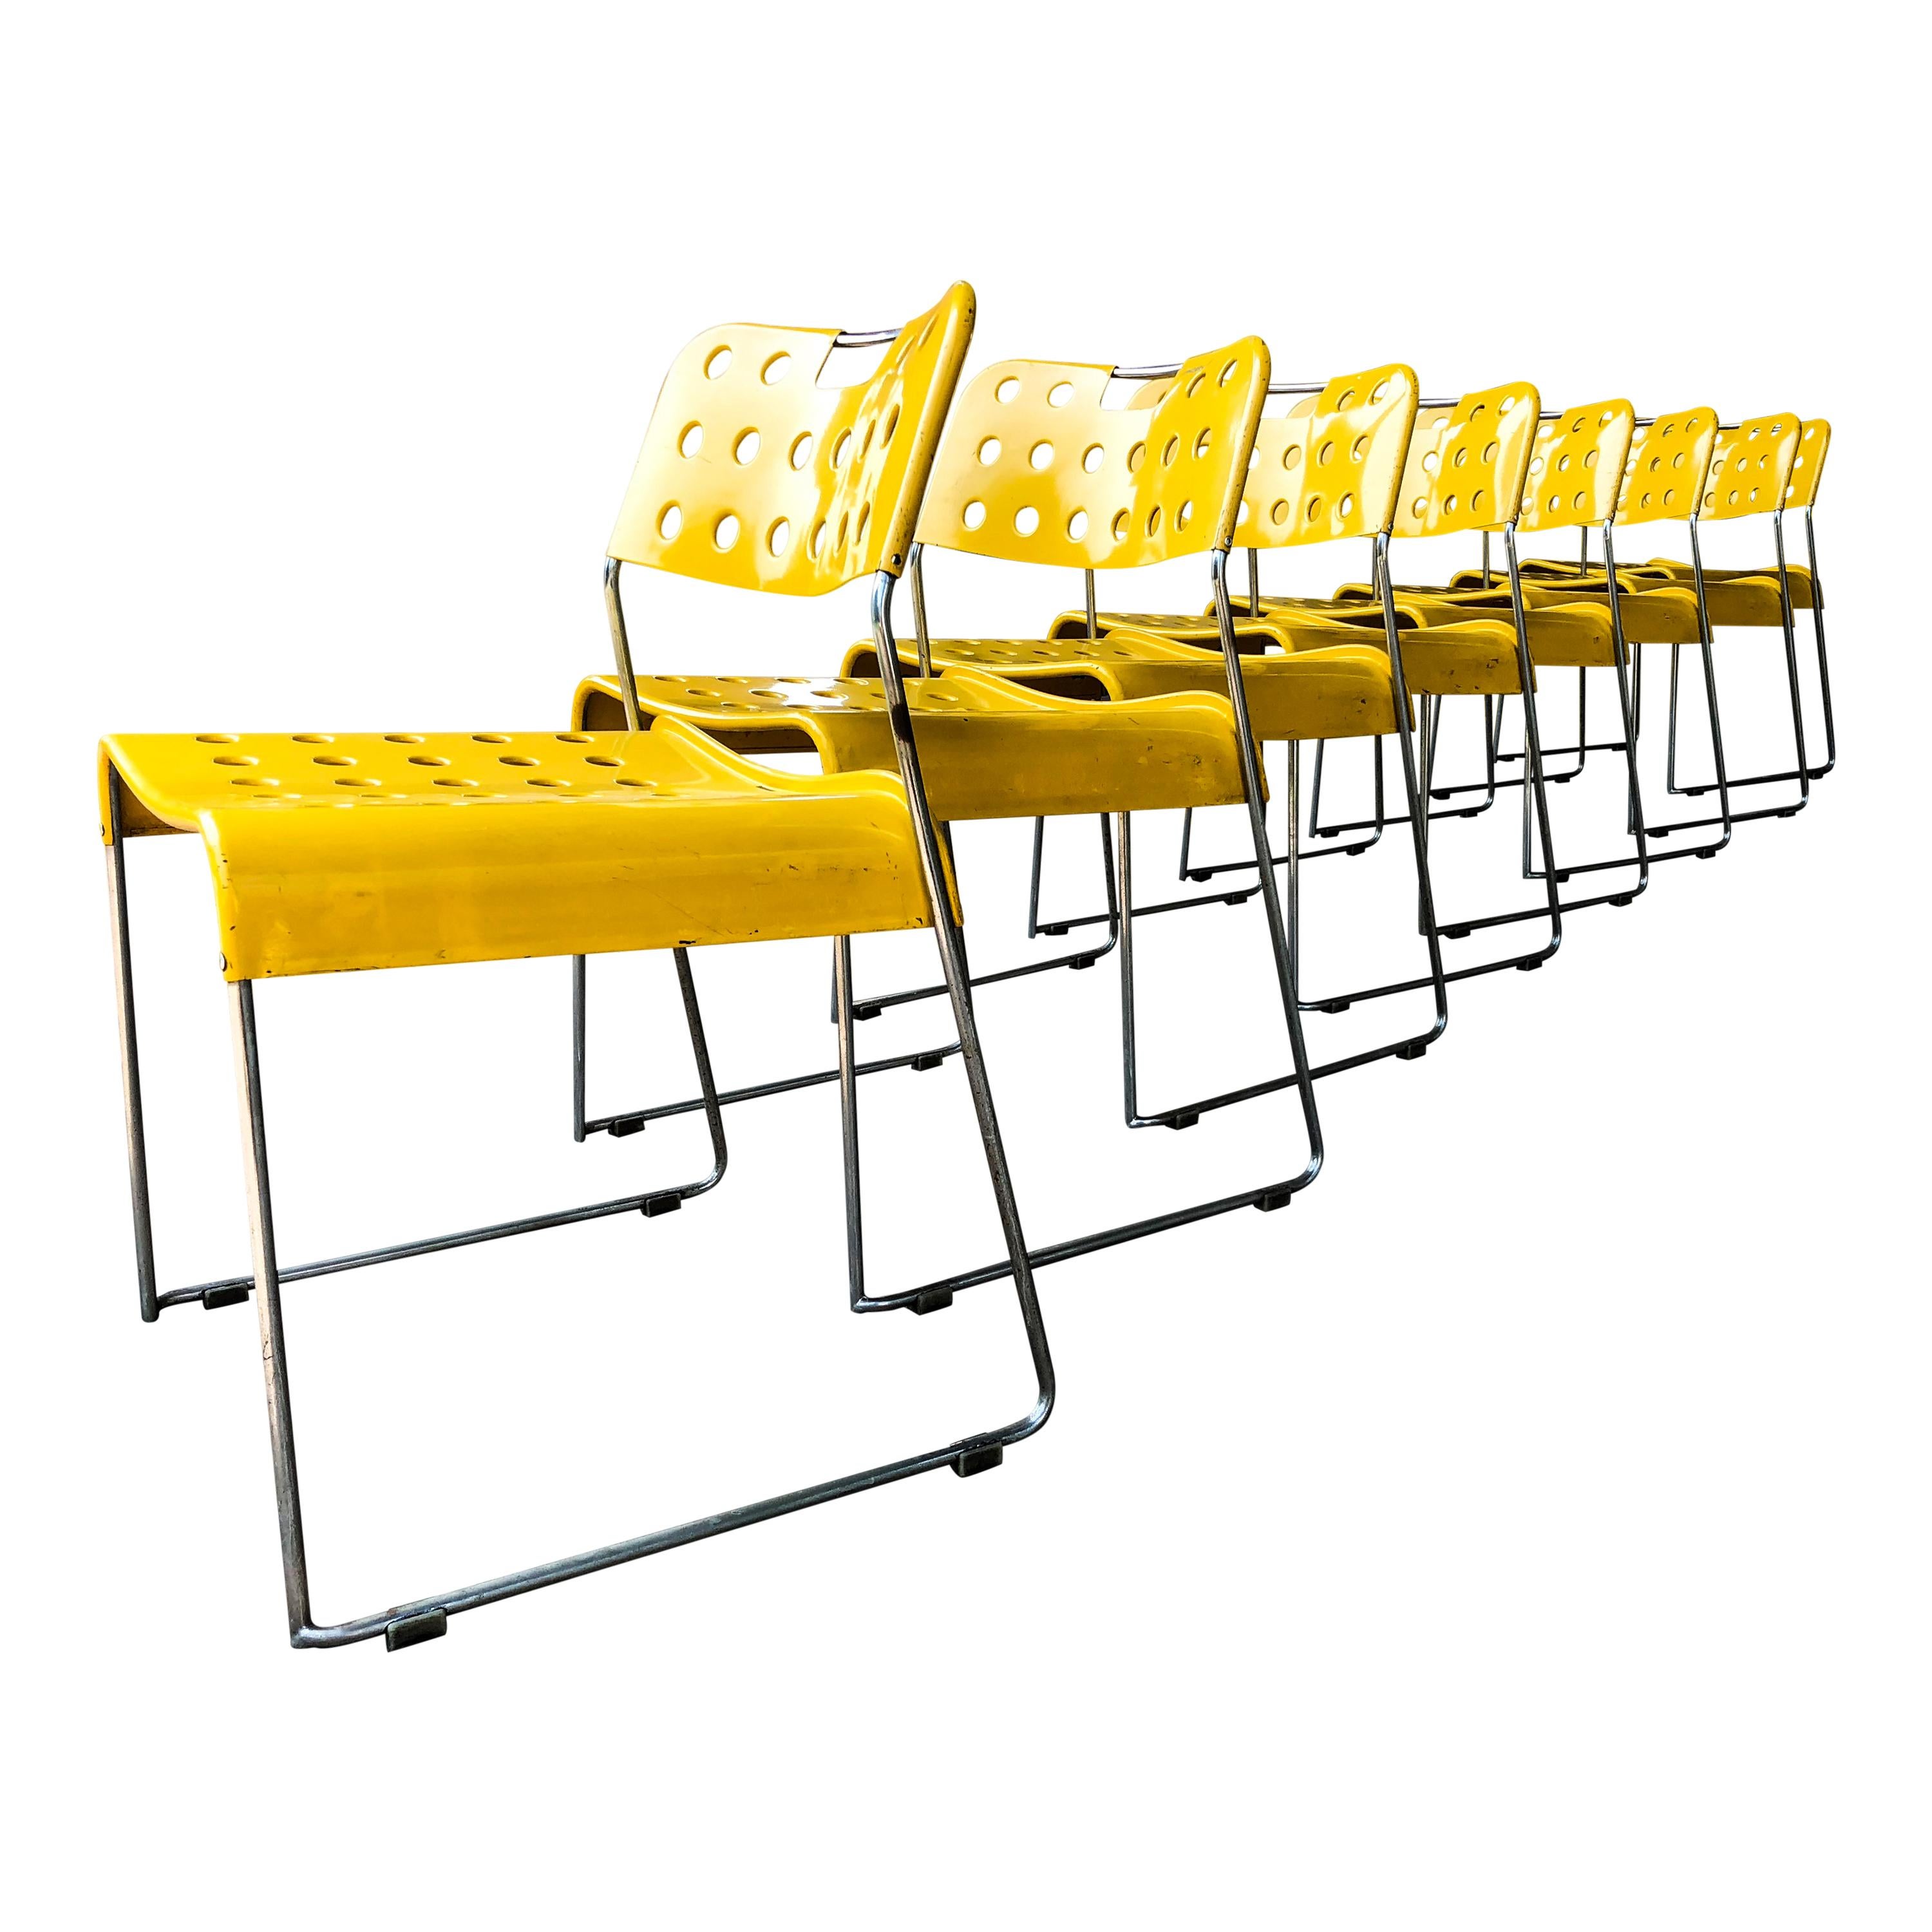 Italian Rodney Kinsman Space Age Yellow Omstak Chair for Bieffeplast, 1971, Set of 8 For Sale